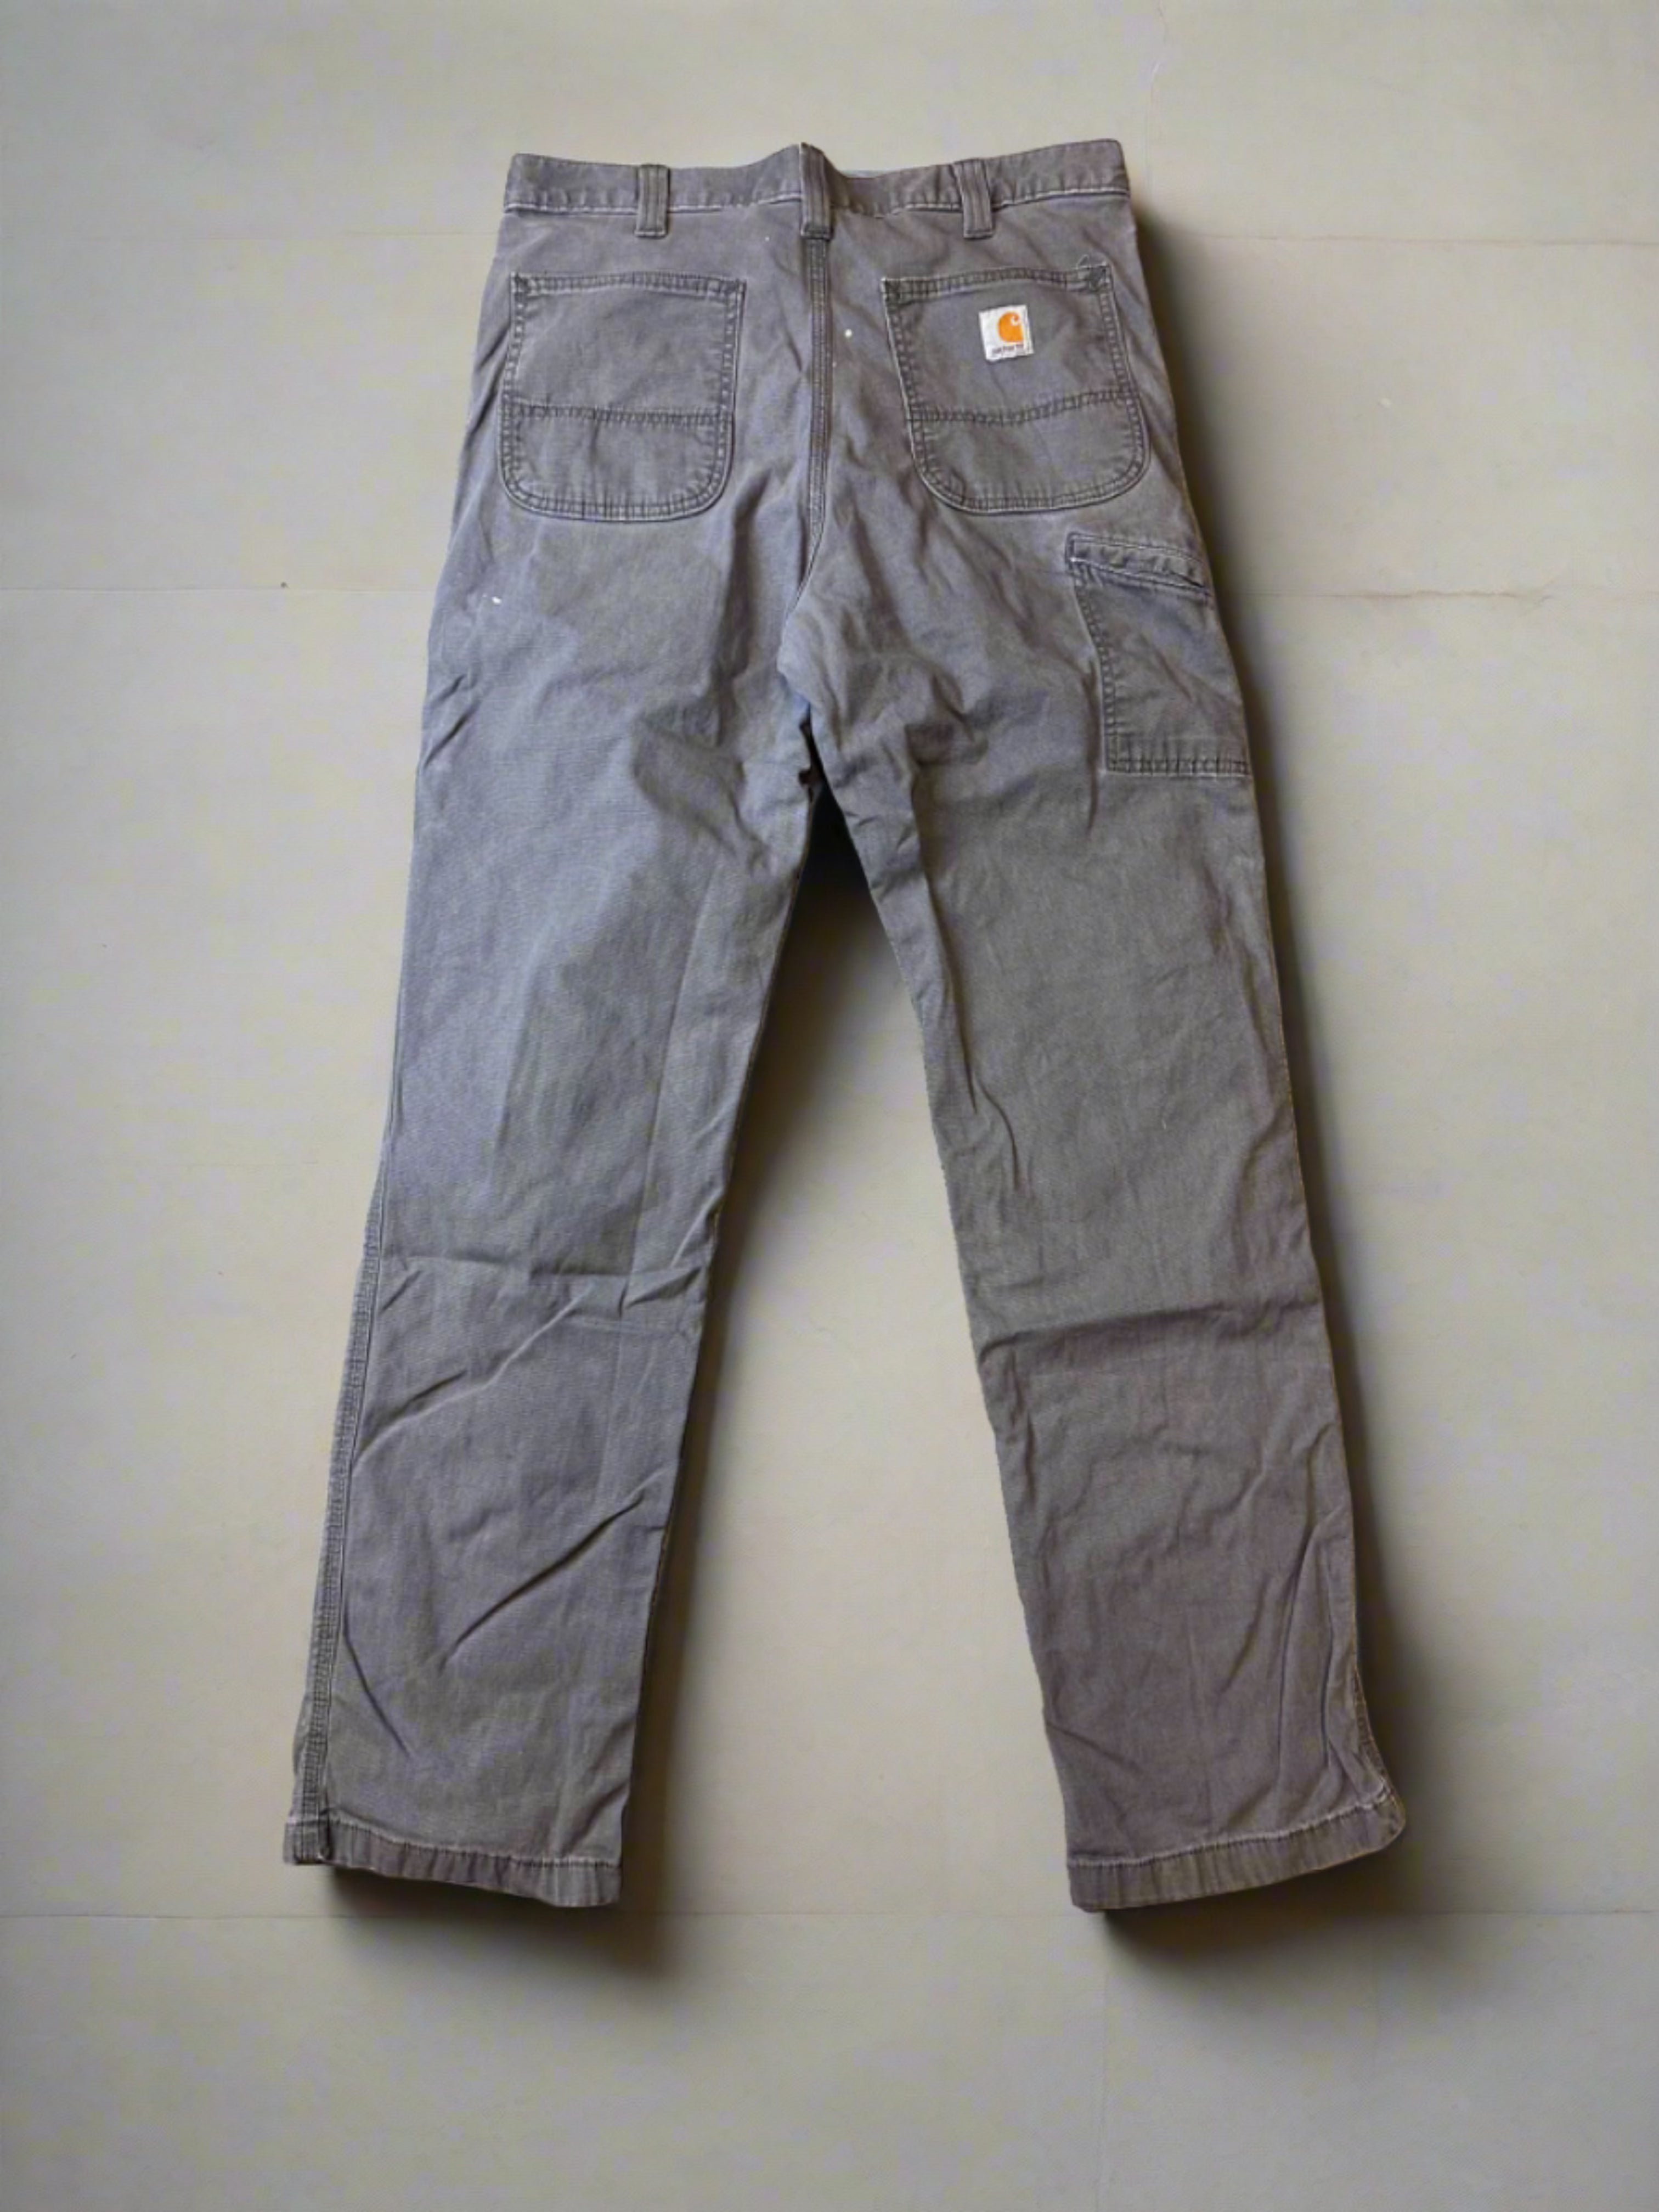 Vintage Carhartt Carpenter Pants - size 33x34